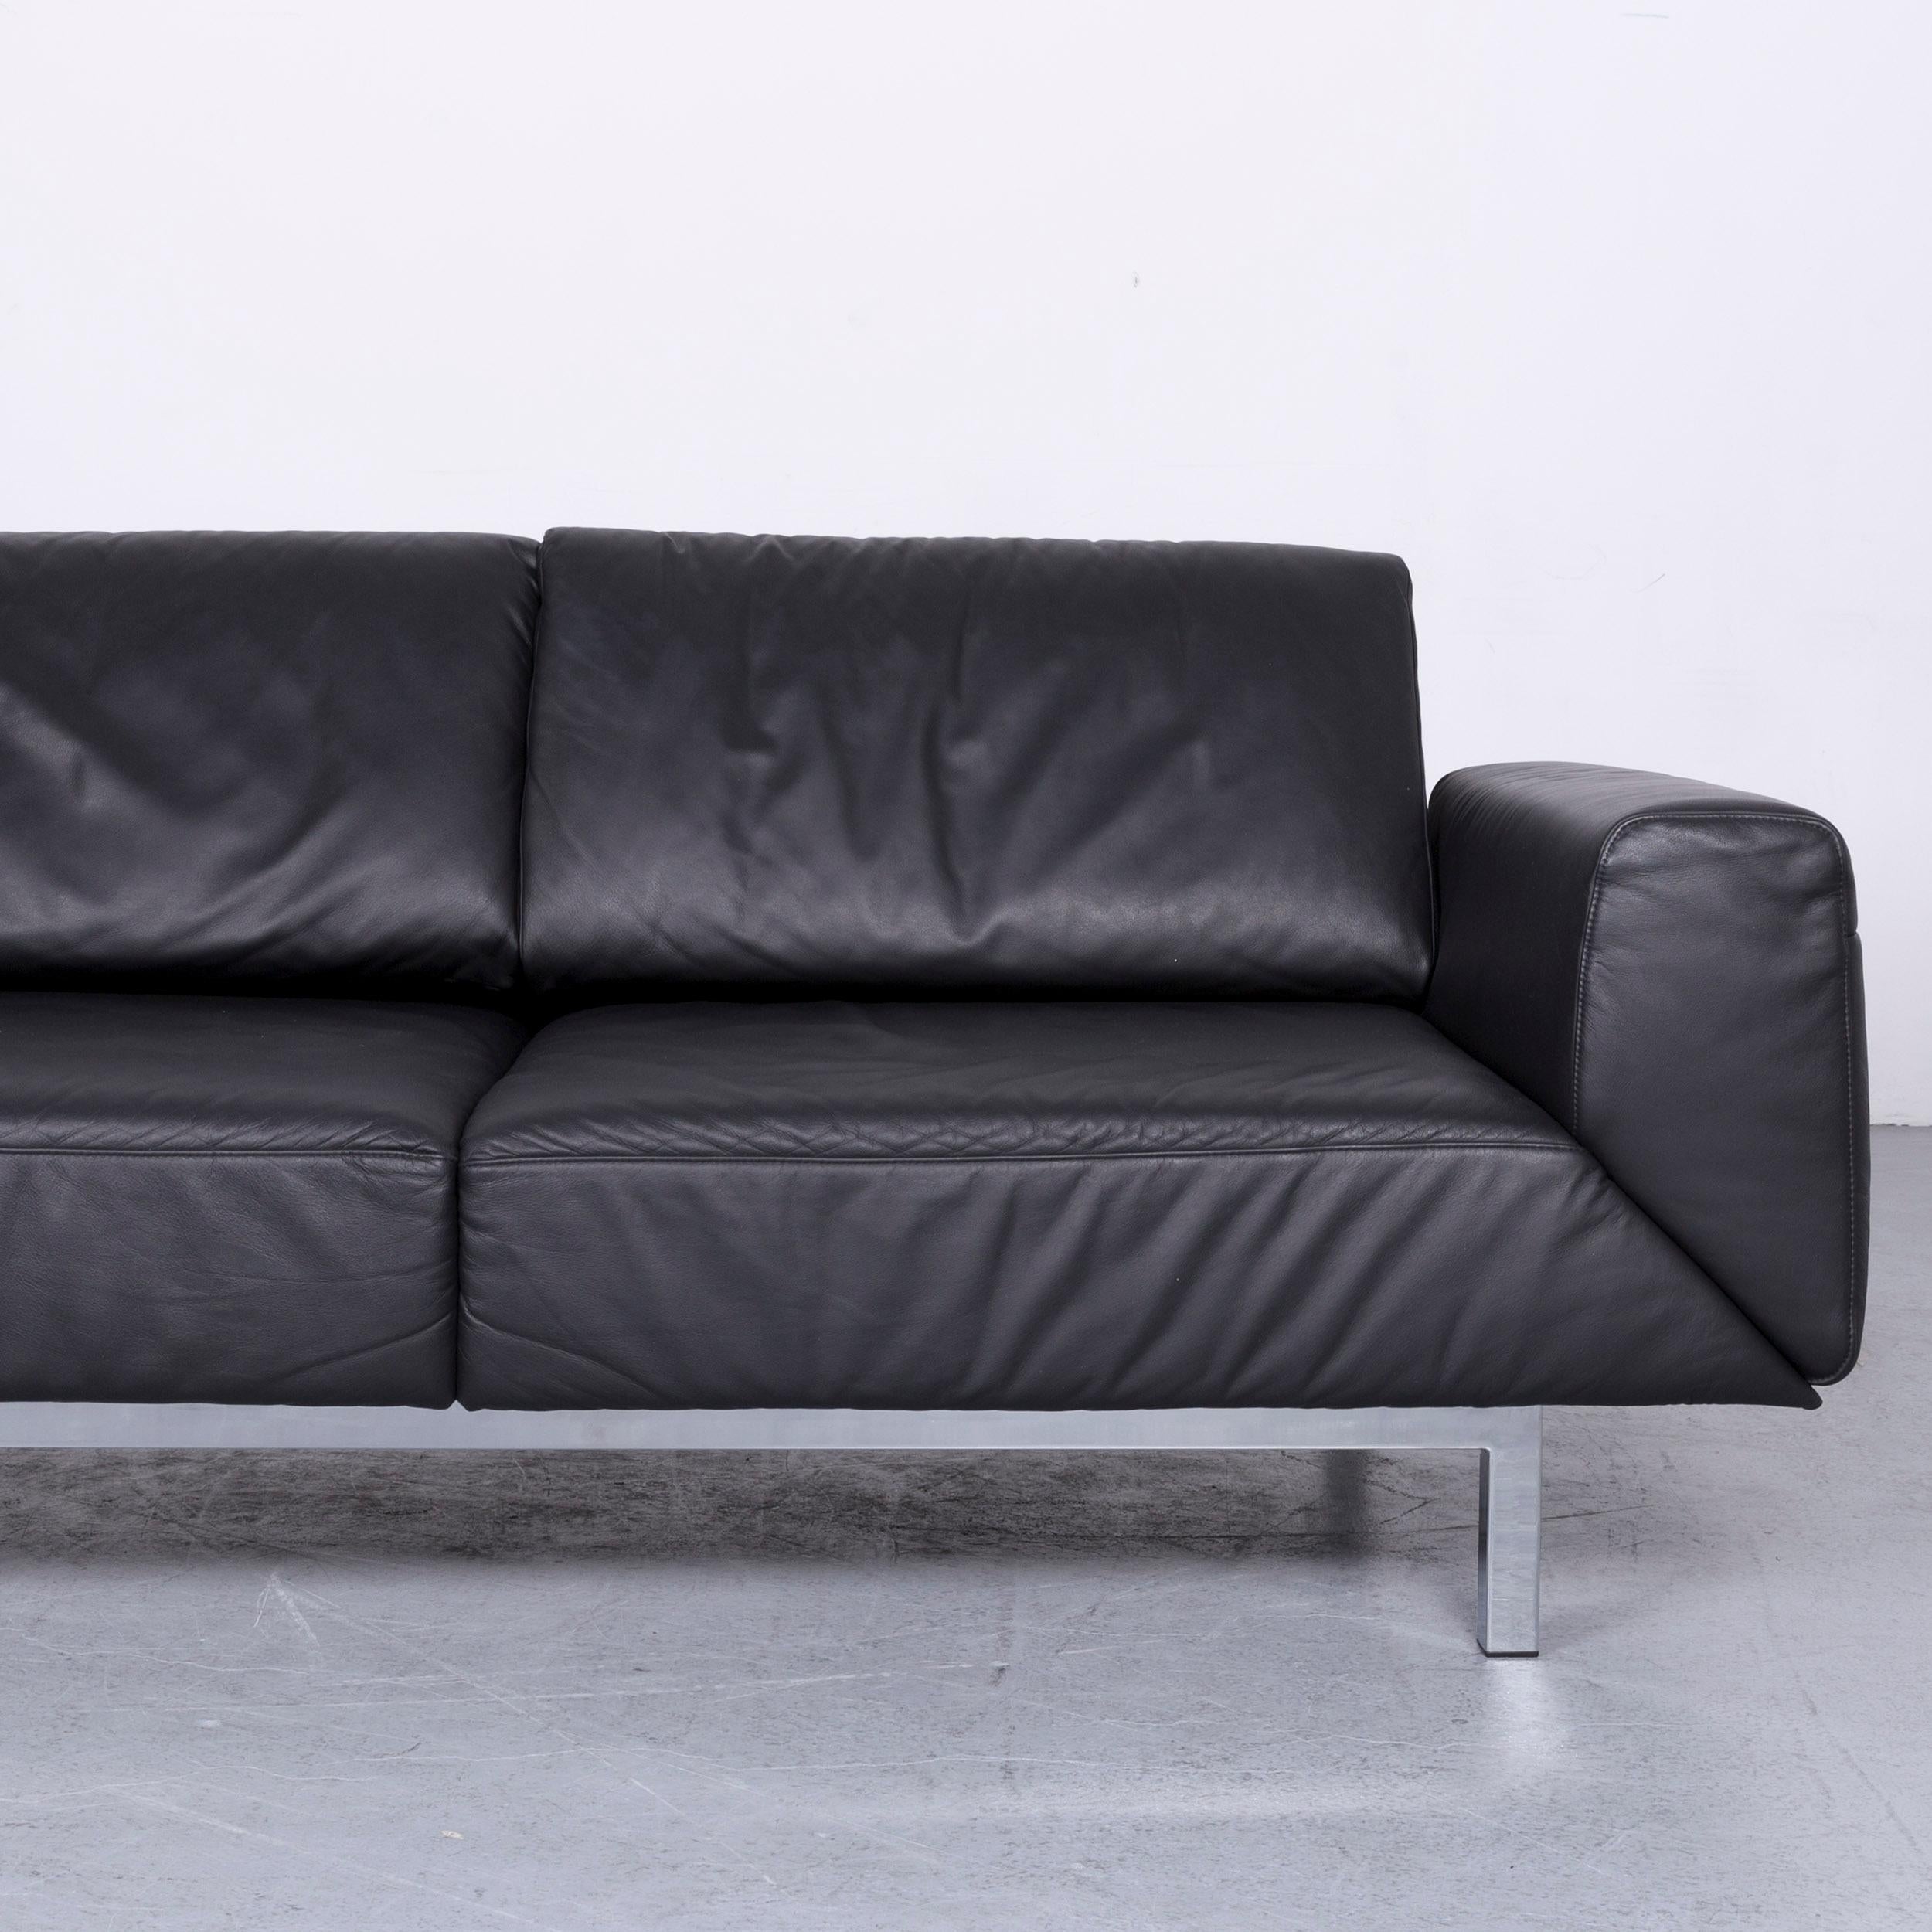 Mondo Relaxa Designer Three-Seat Sofa Leather Black Function Couch 2